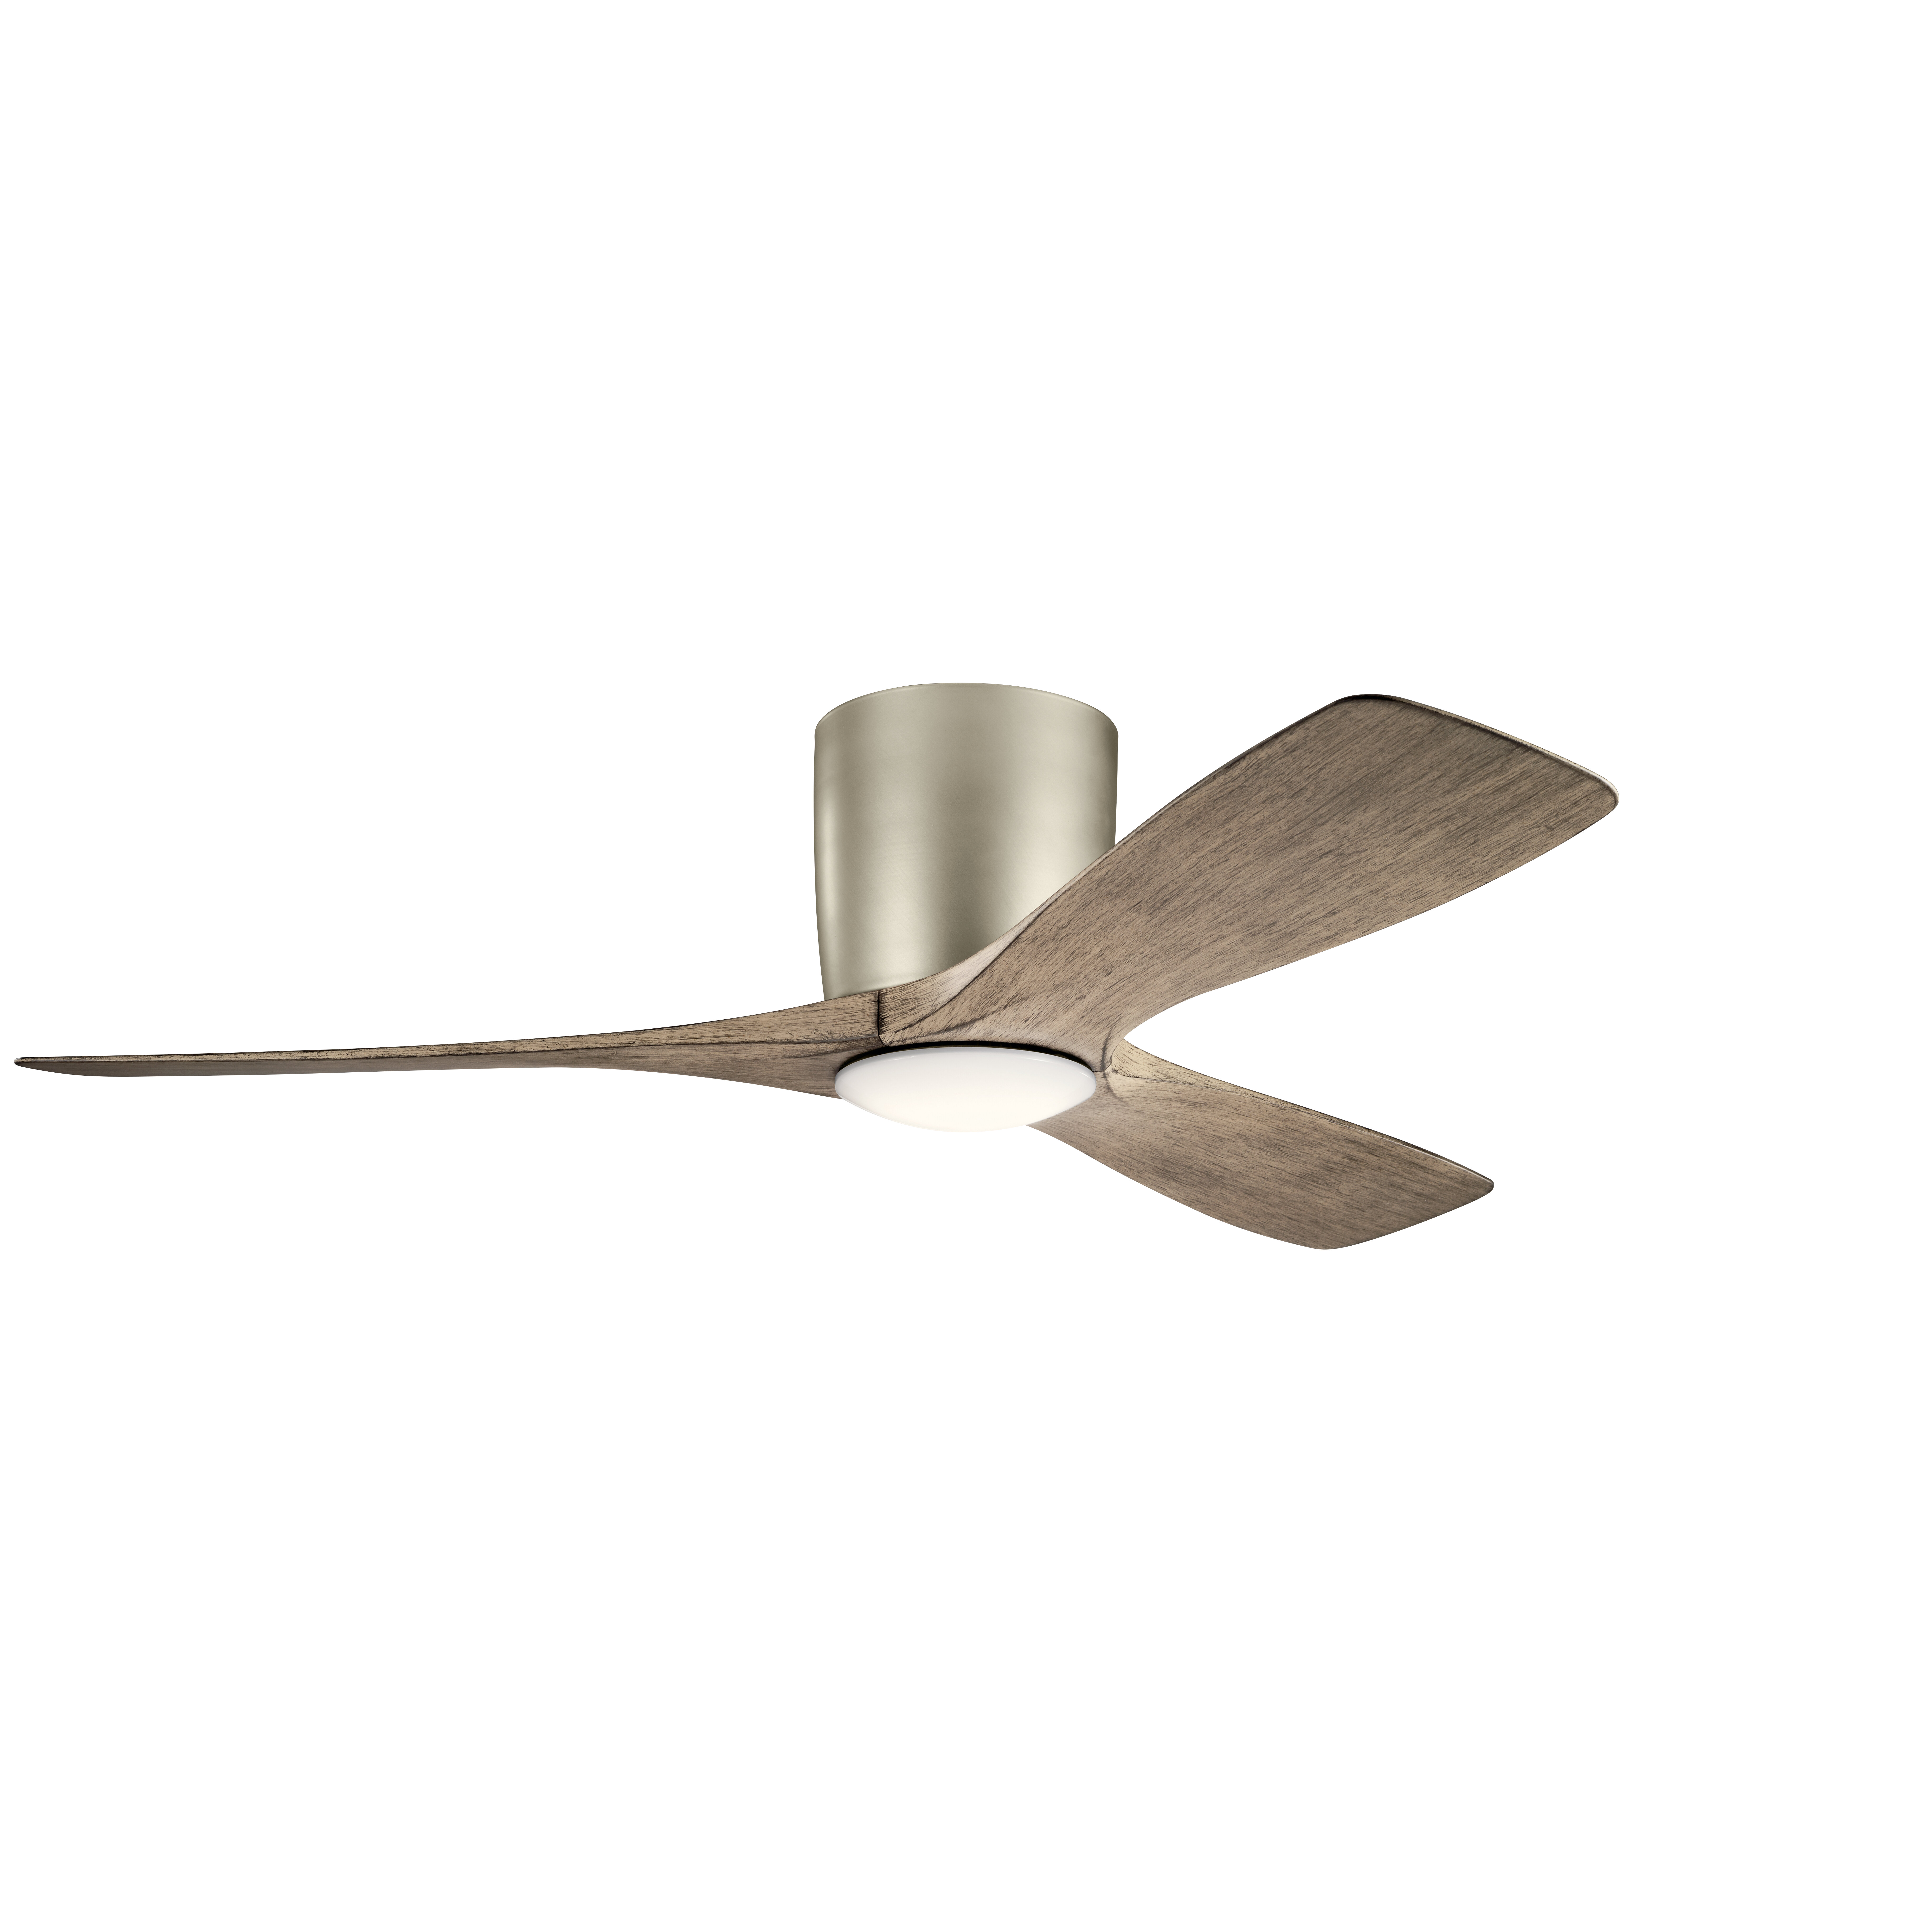 George Oliver 48 Mcgrew 3 Blade Led Ceiling Fan Light Kit